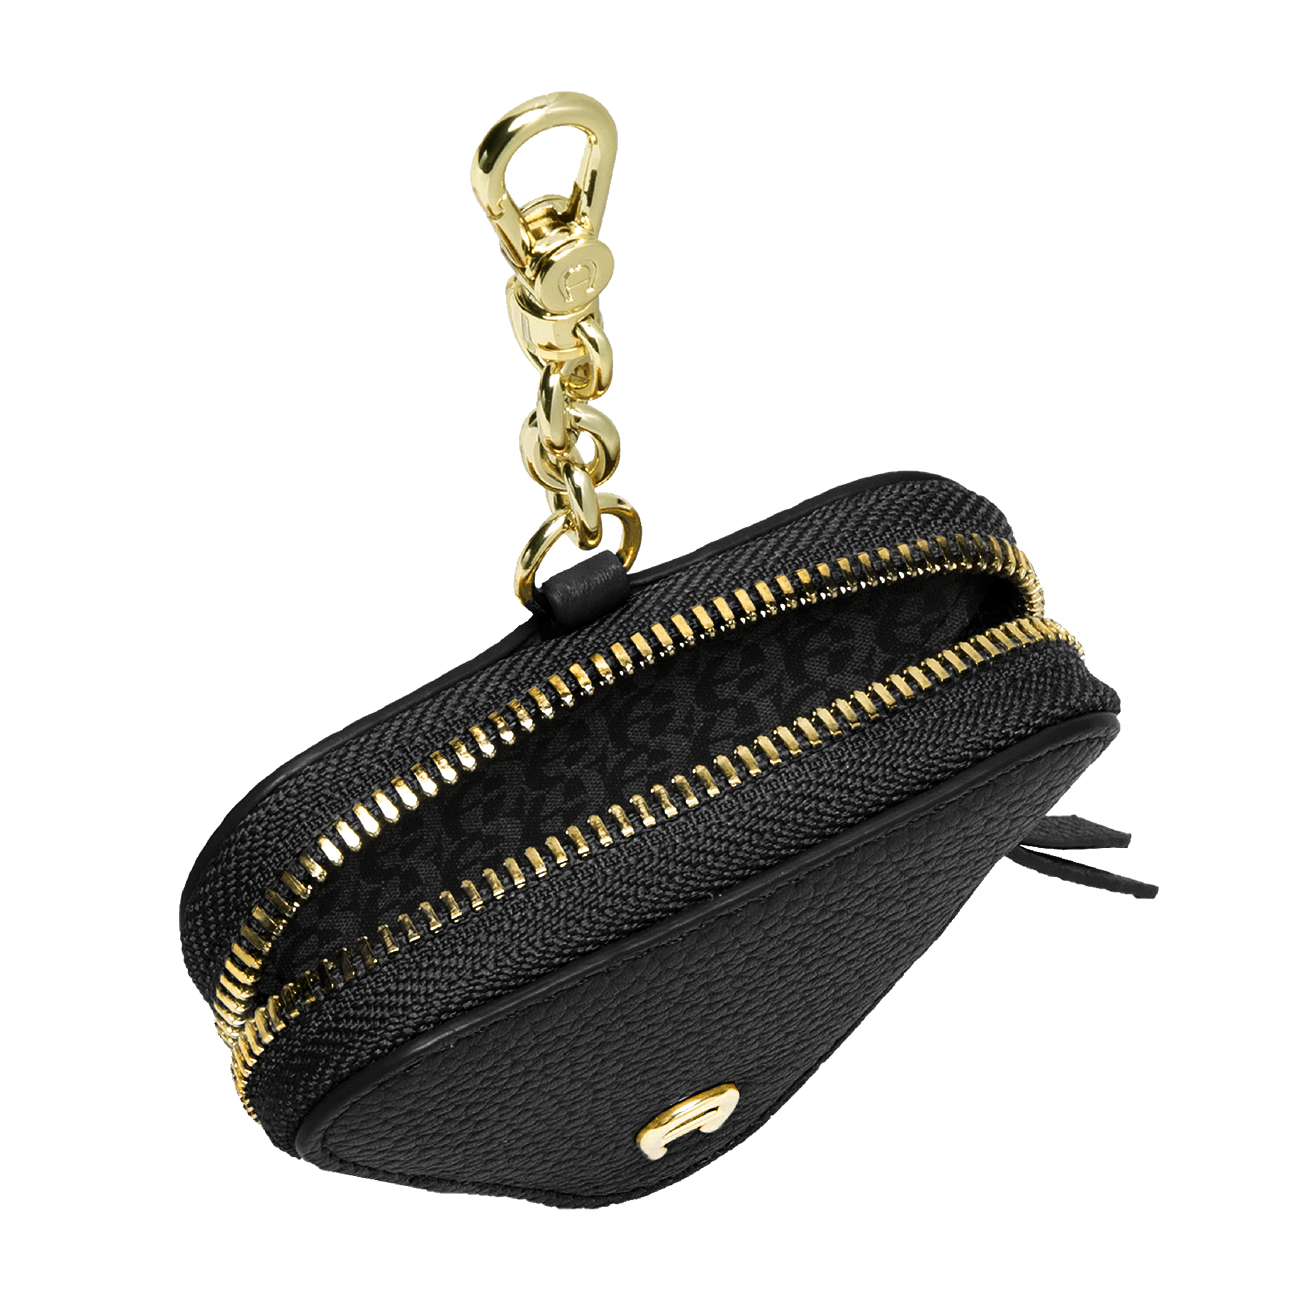 Fashion Key Ring Dog black - Keychains & Key Cases - Women - AIGNER Club